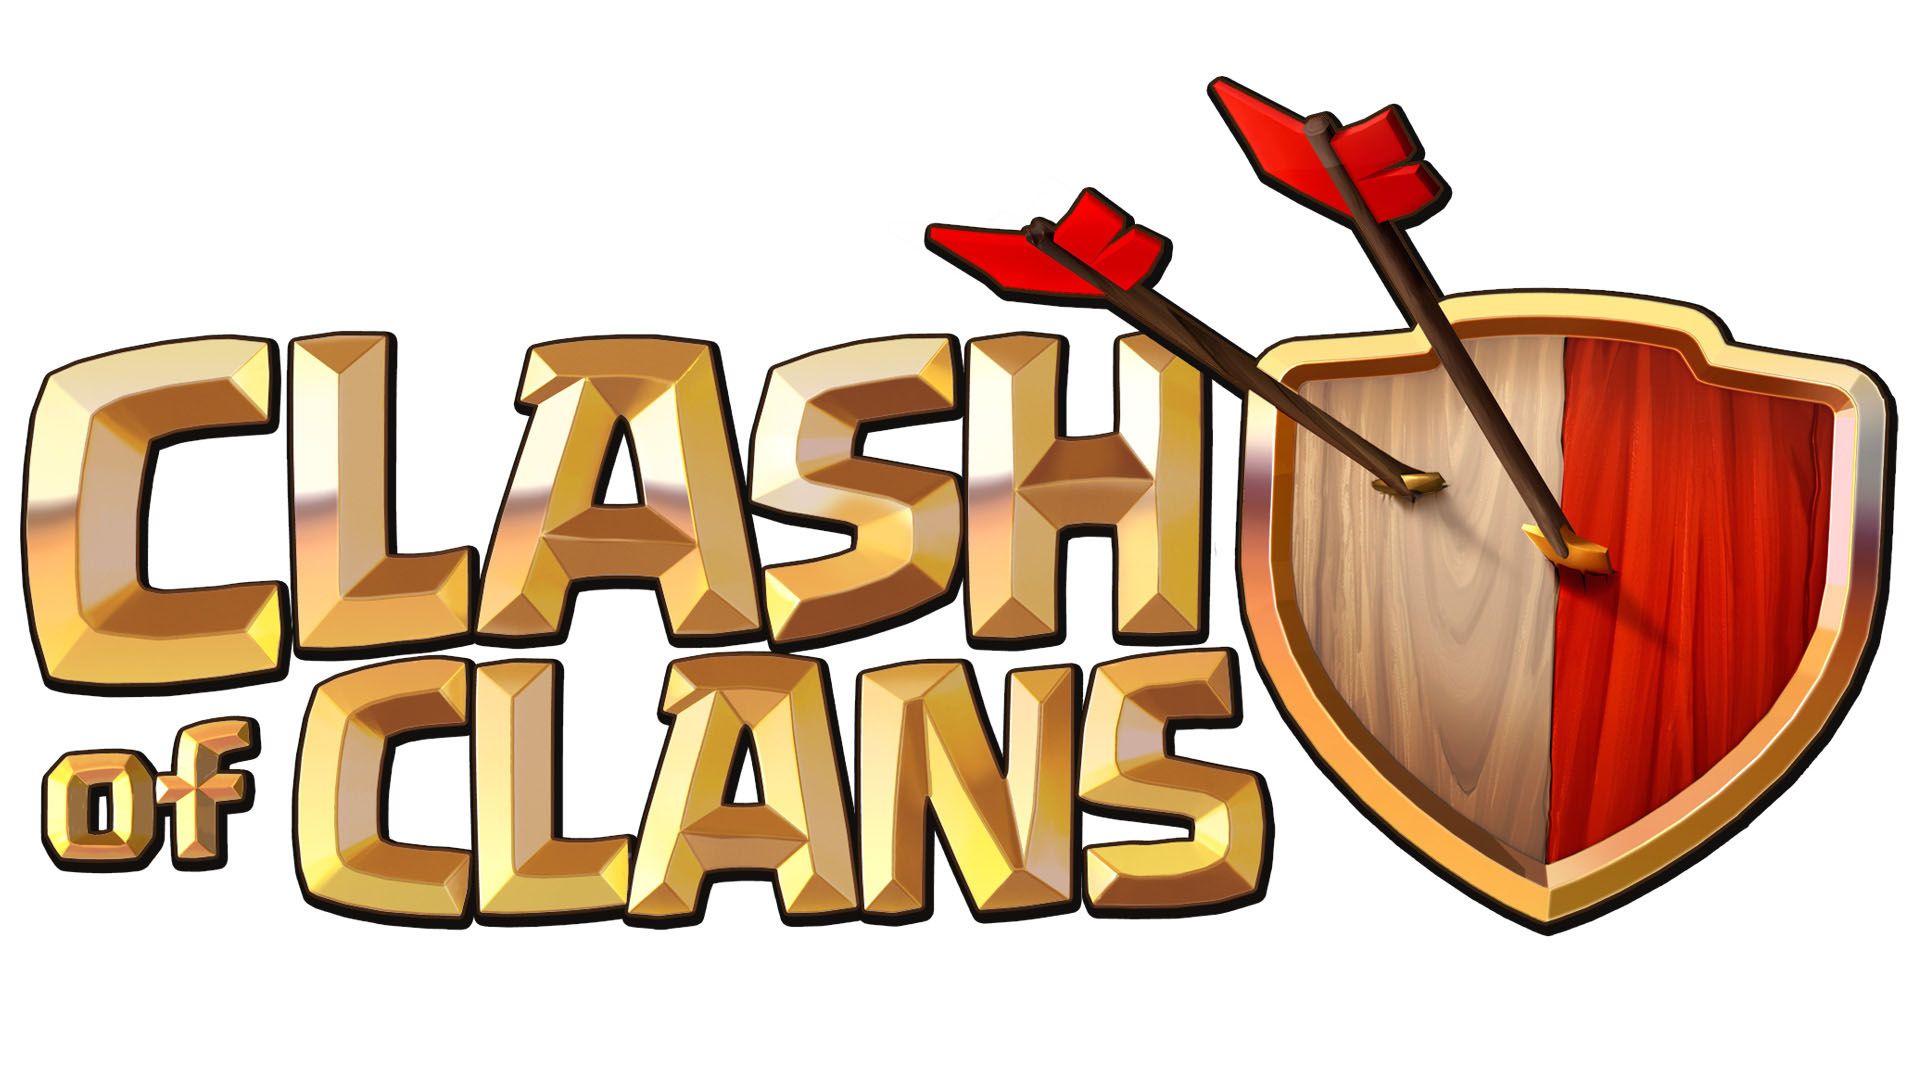 Clash of Clans Logo Wallpaper 47419 1920x1080px